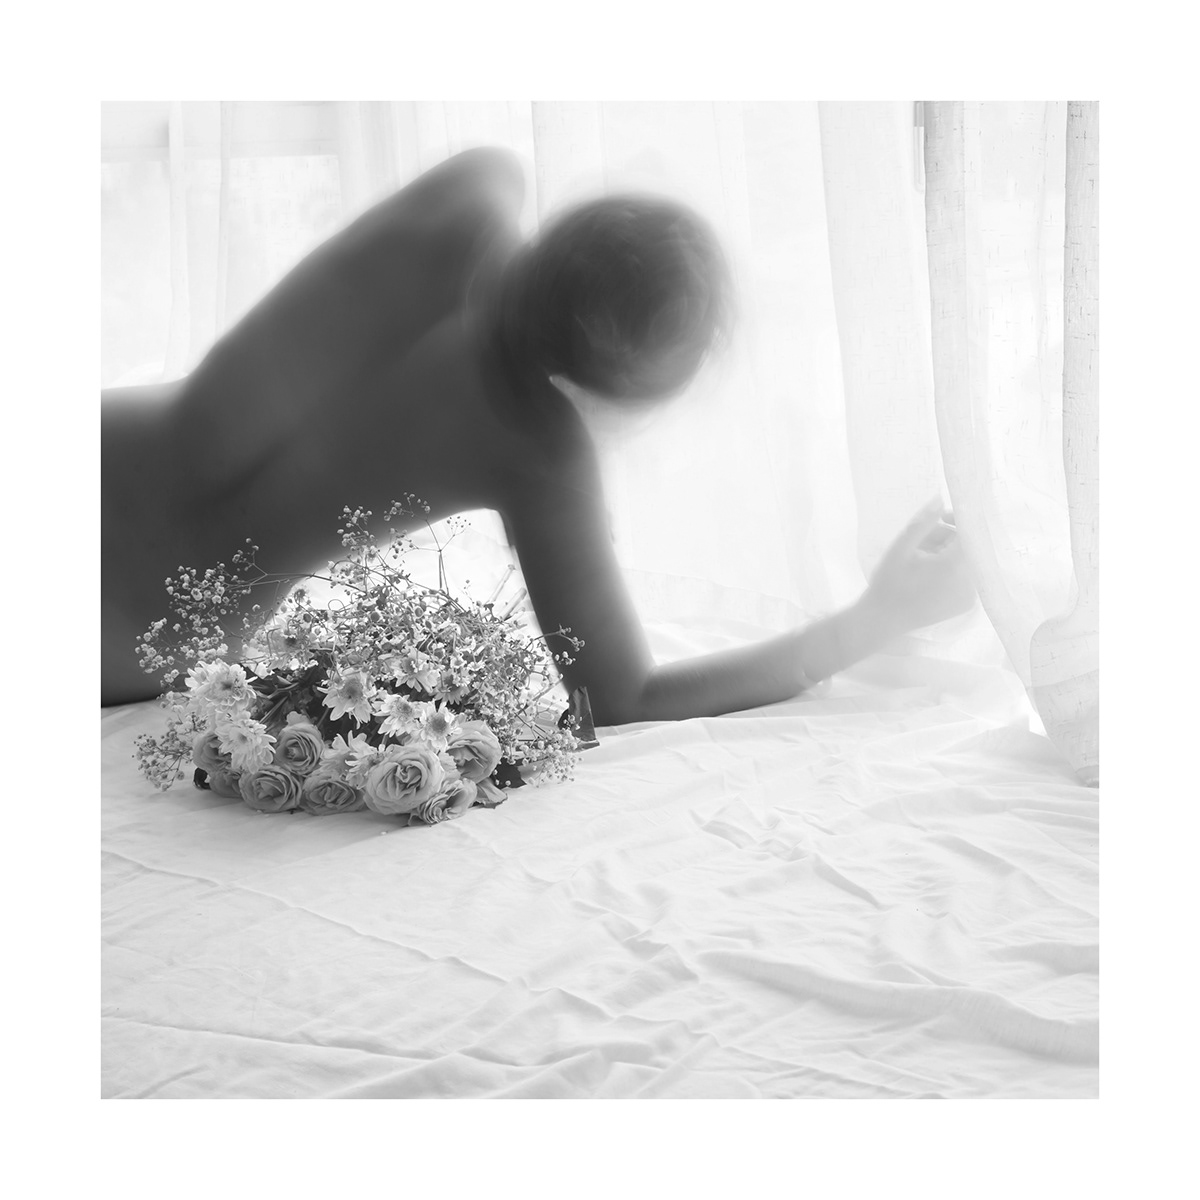 self portrait black and white long exposure 120 film Flowers nudes soft light female figure